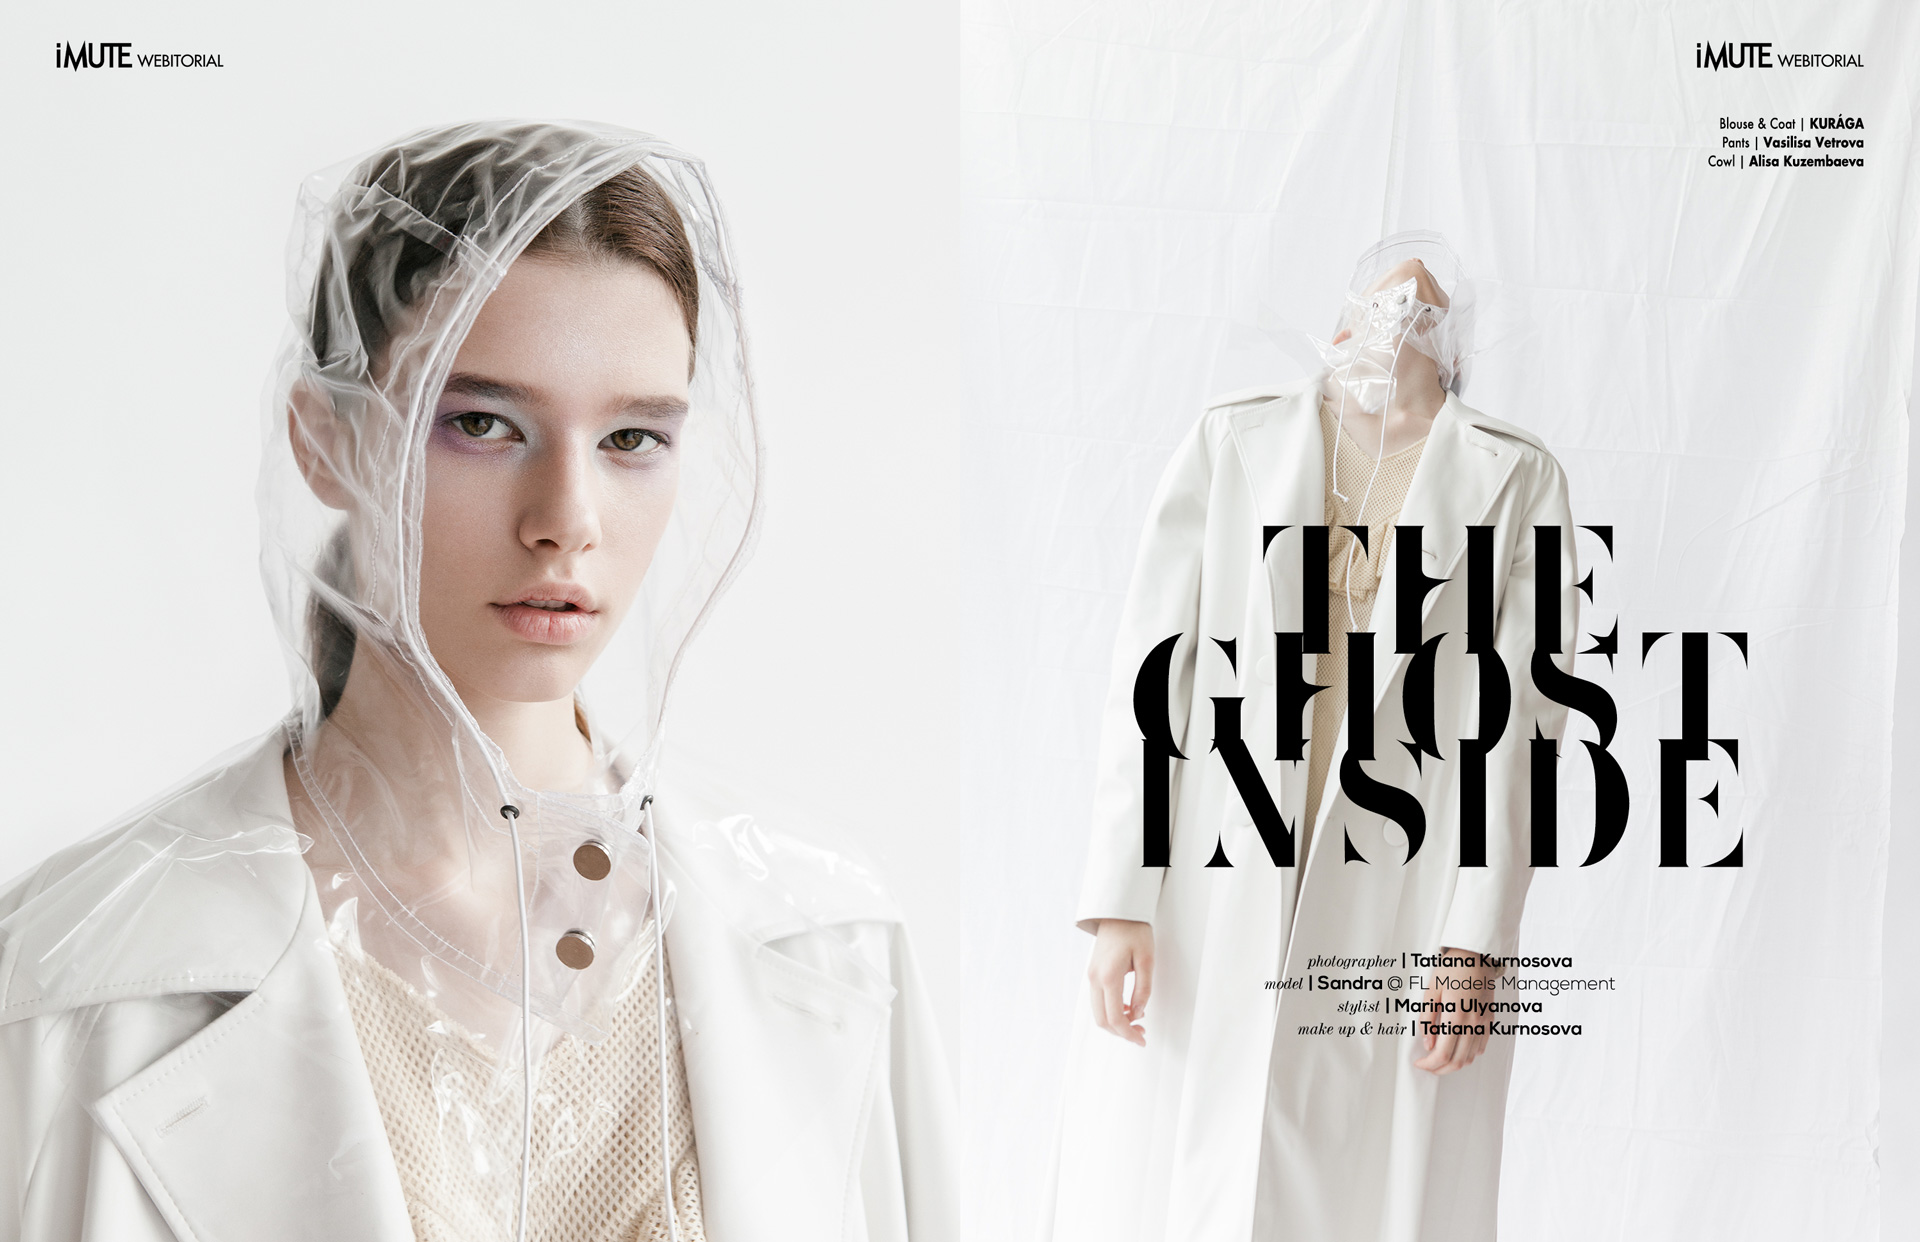 The ghost inside webitorial for iMute Magazine Photographer | Tatiana Kurnosova Model | Sandra @ FL Models Management Stylist | Marina Ulyanova Makeup & Hair | Tatiana Kurnosova